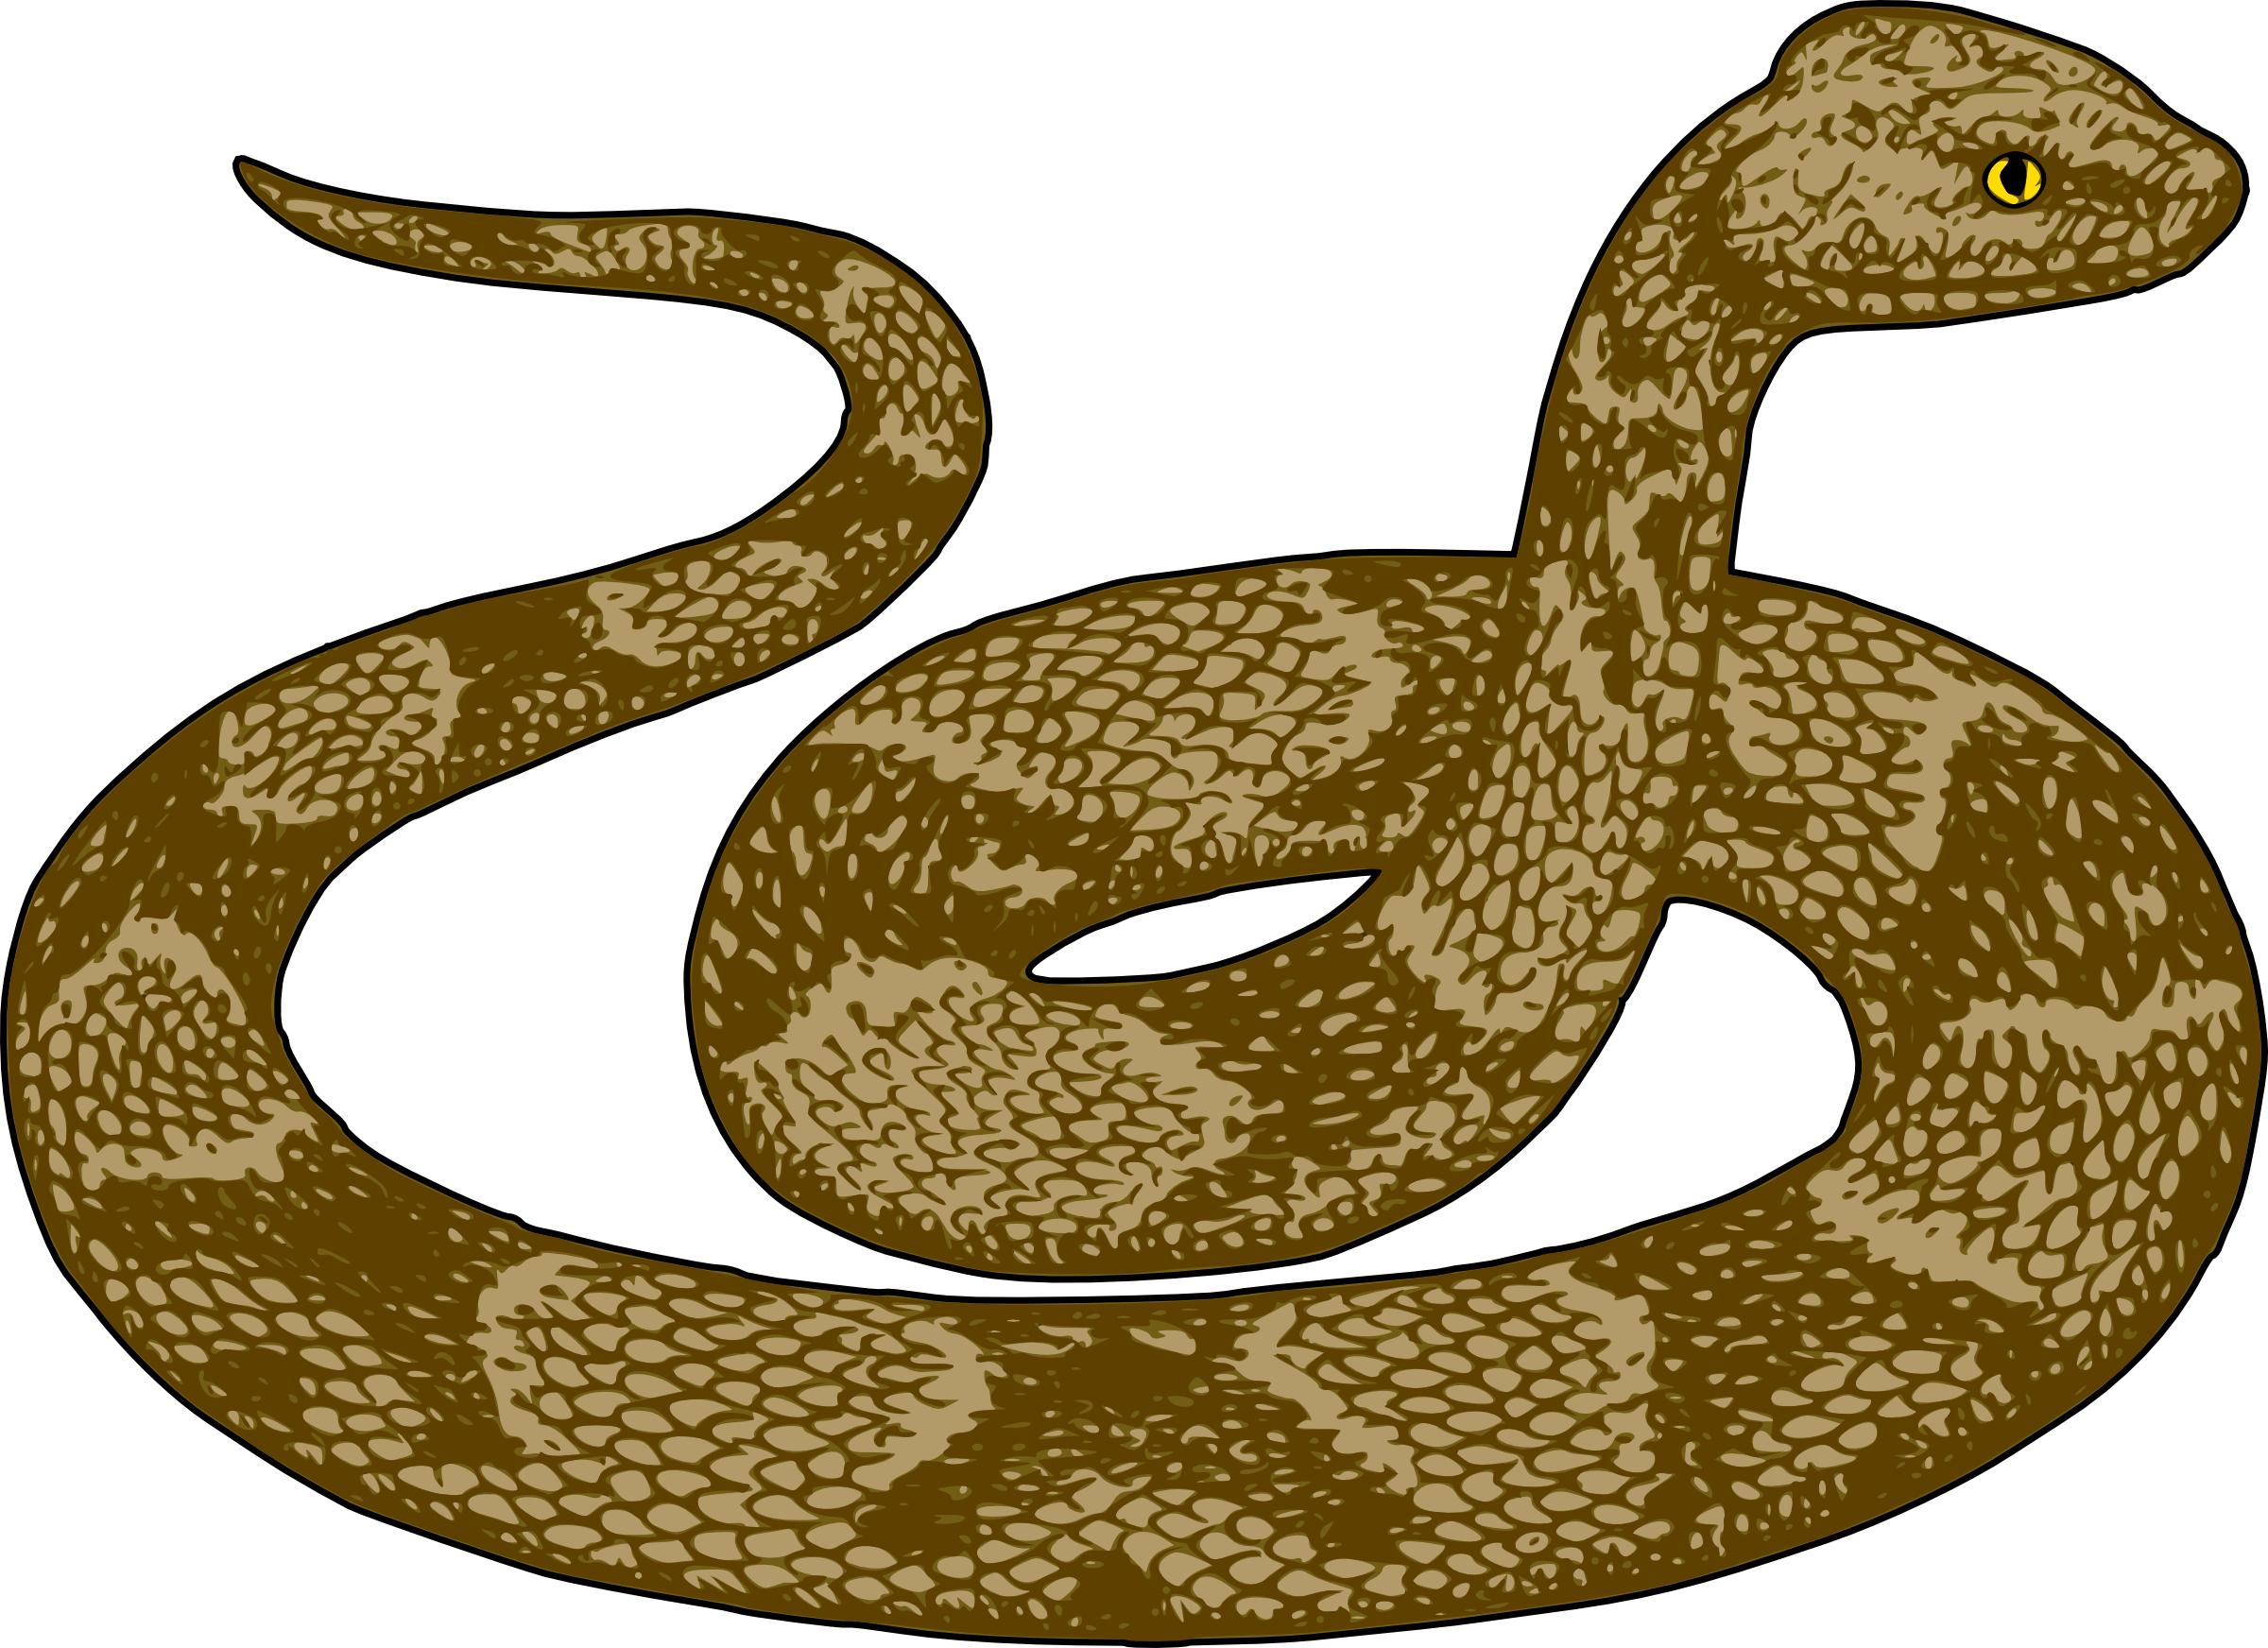 Clip art of a snake 